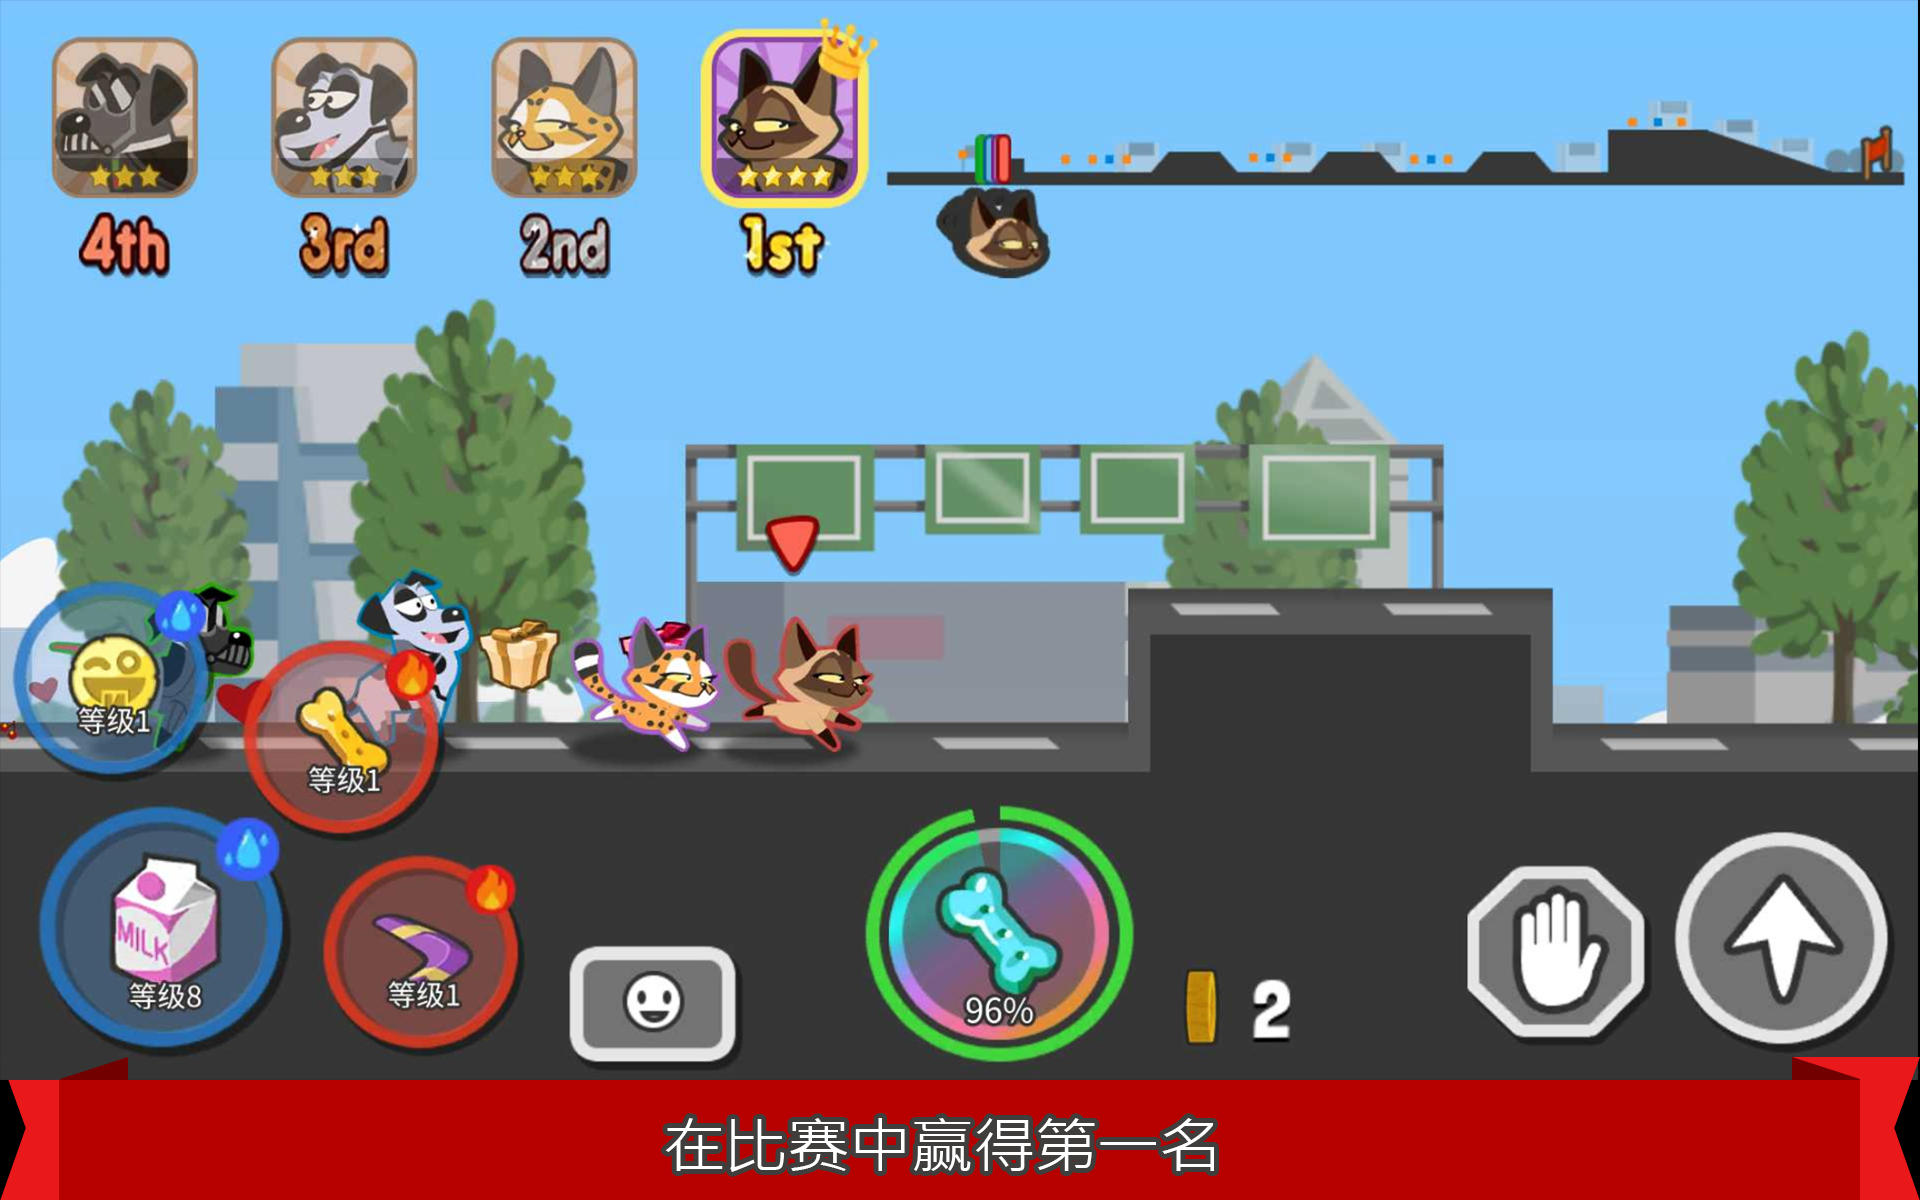 Screenshot 1 of Pets Race - 有趣的多人 PvP 在線賽車遊戲 1.2.9